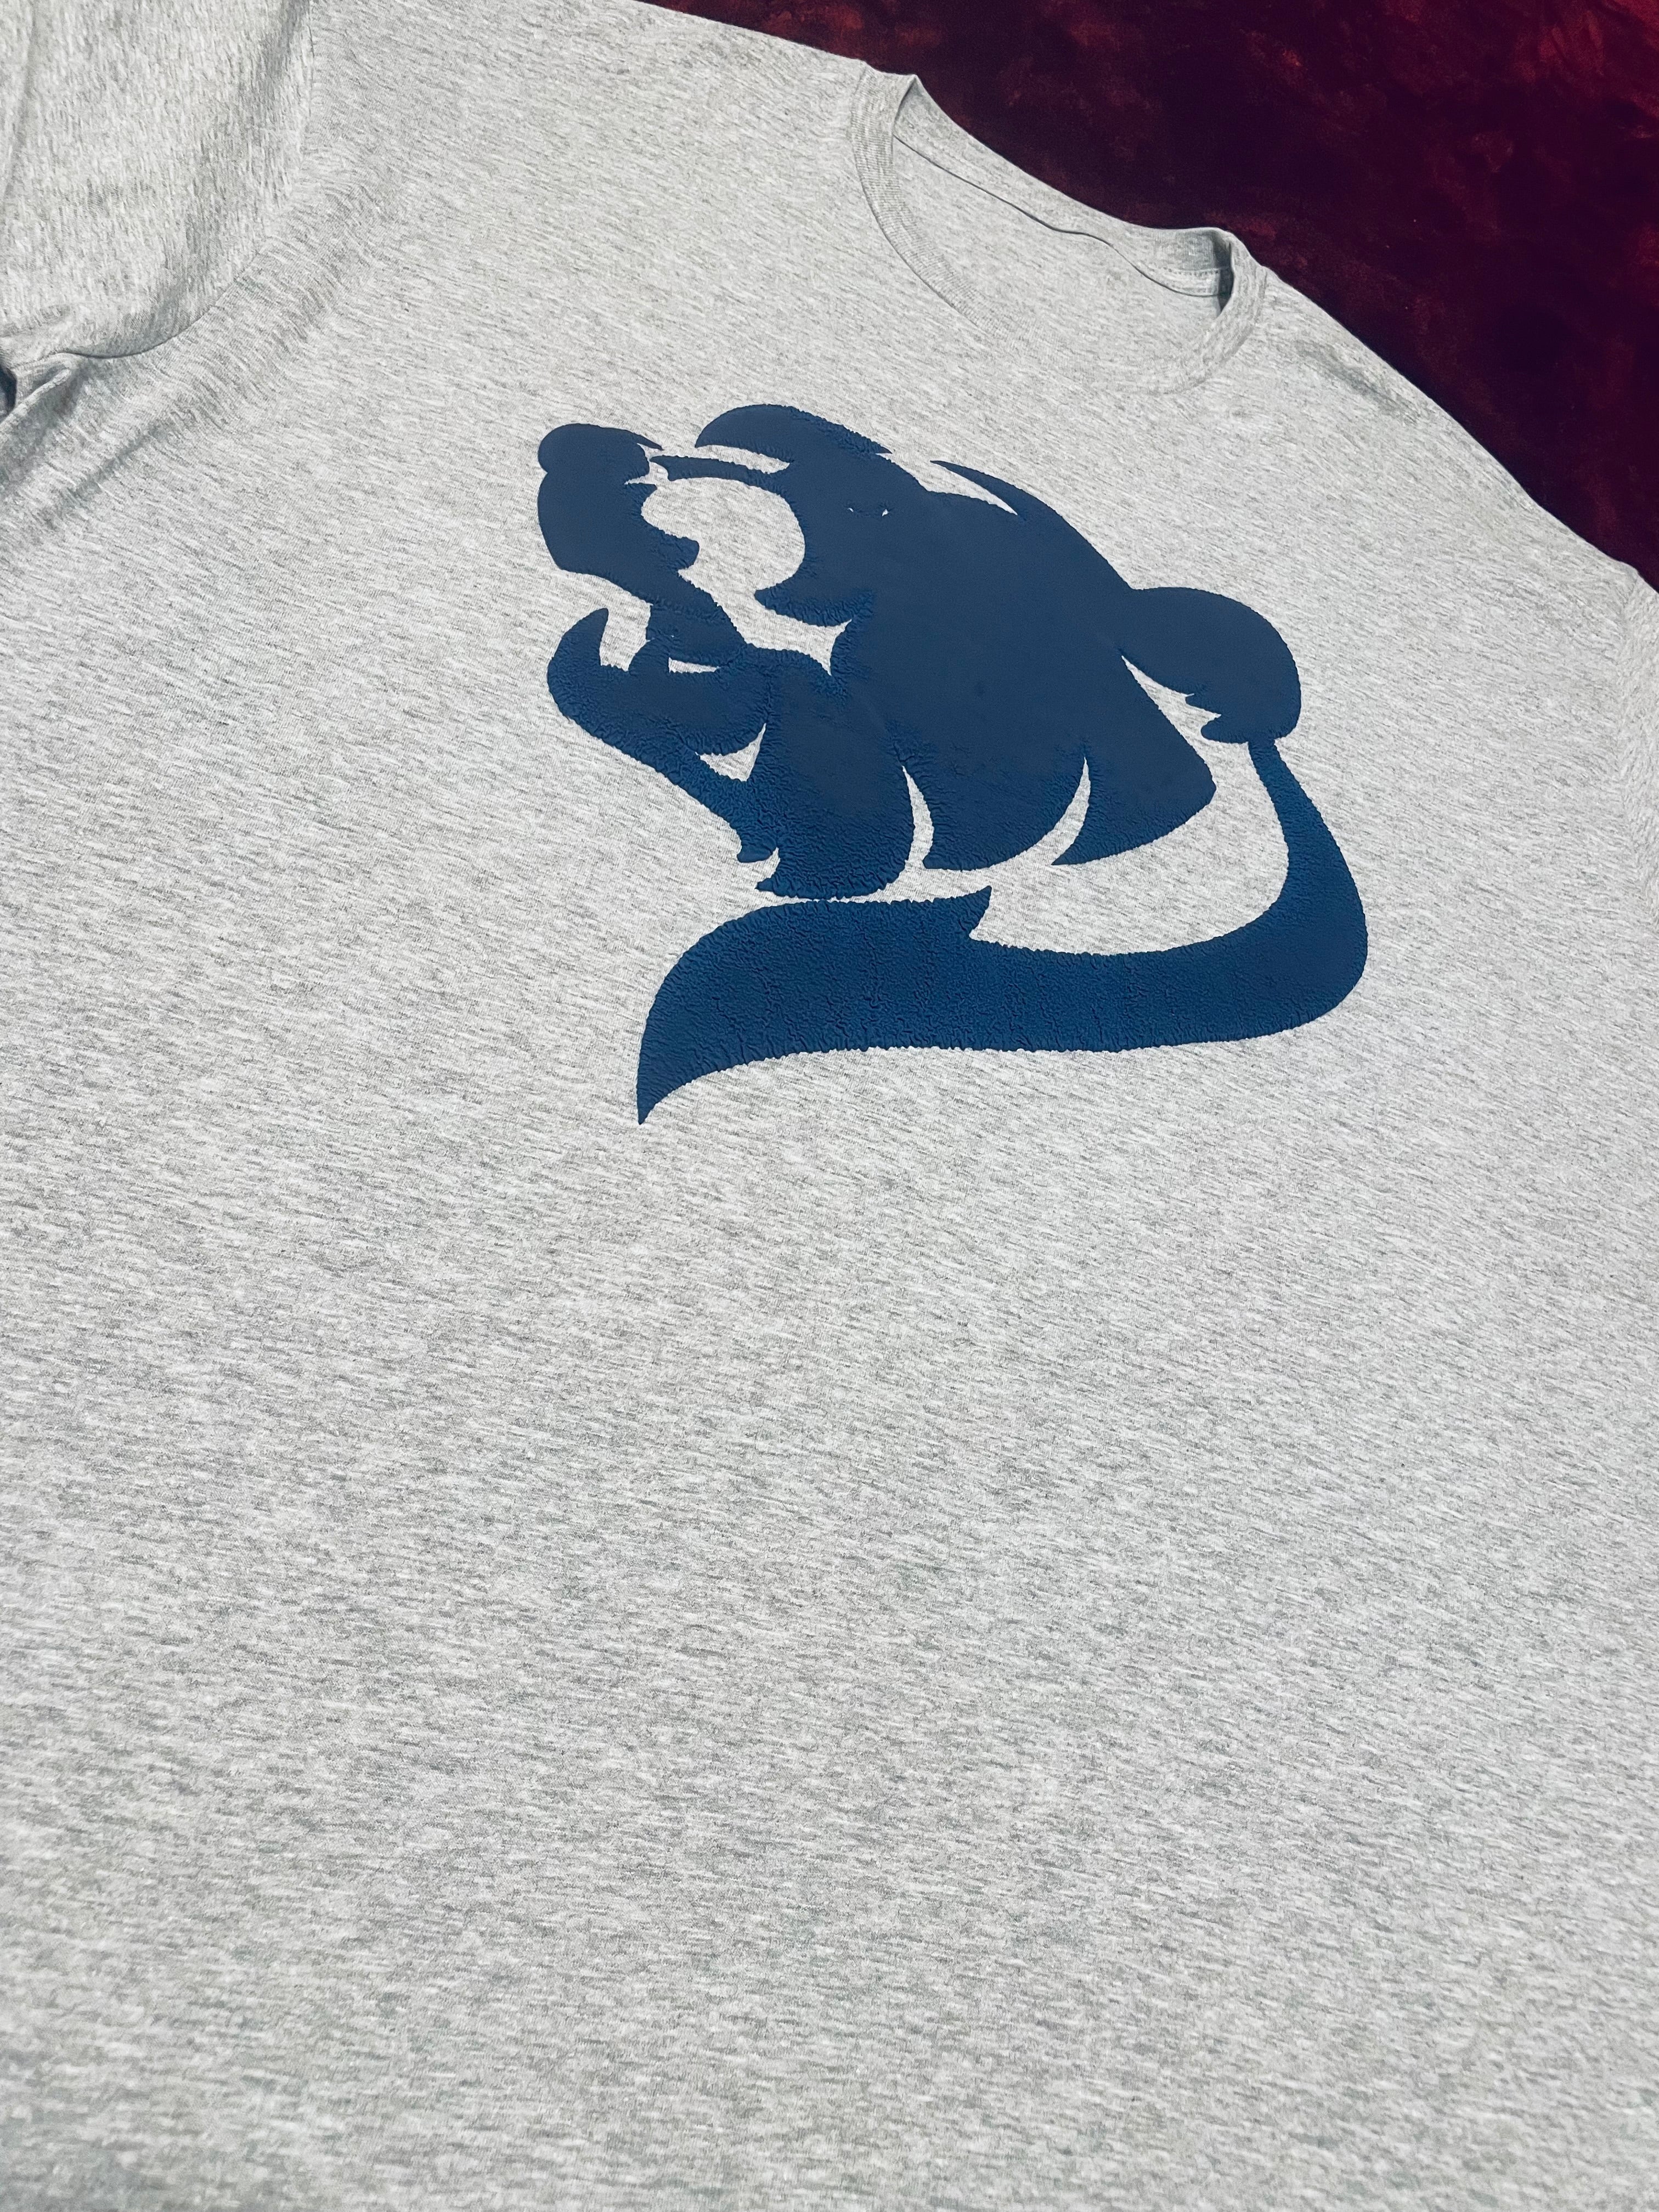 Fallon Aurielle Unisex Signature 3 Piece Spirit Animal Bear Logo Short Set (Silver Gray & Navy Blue)